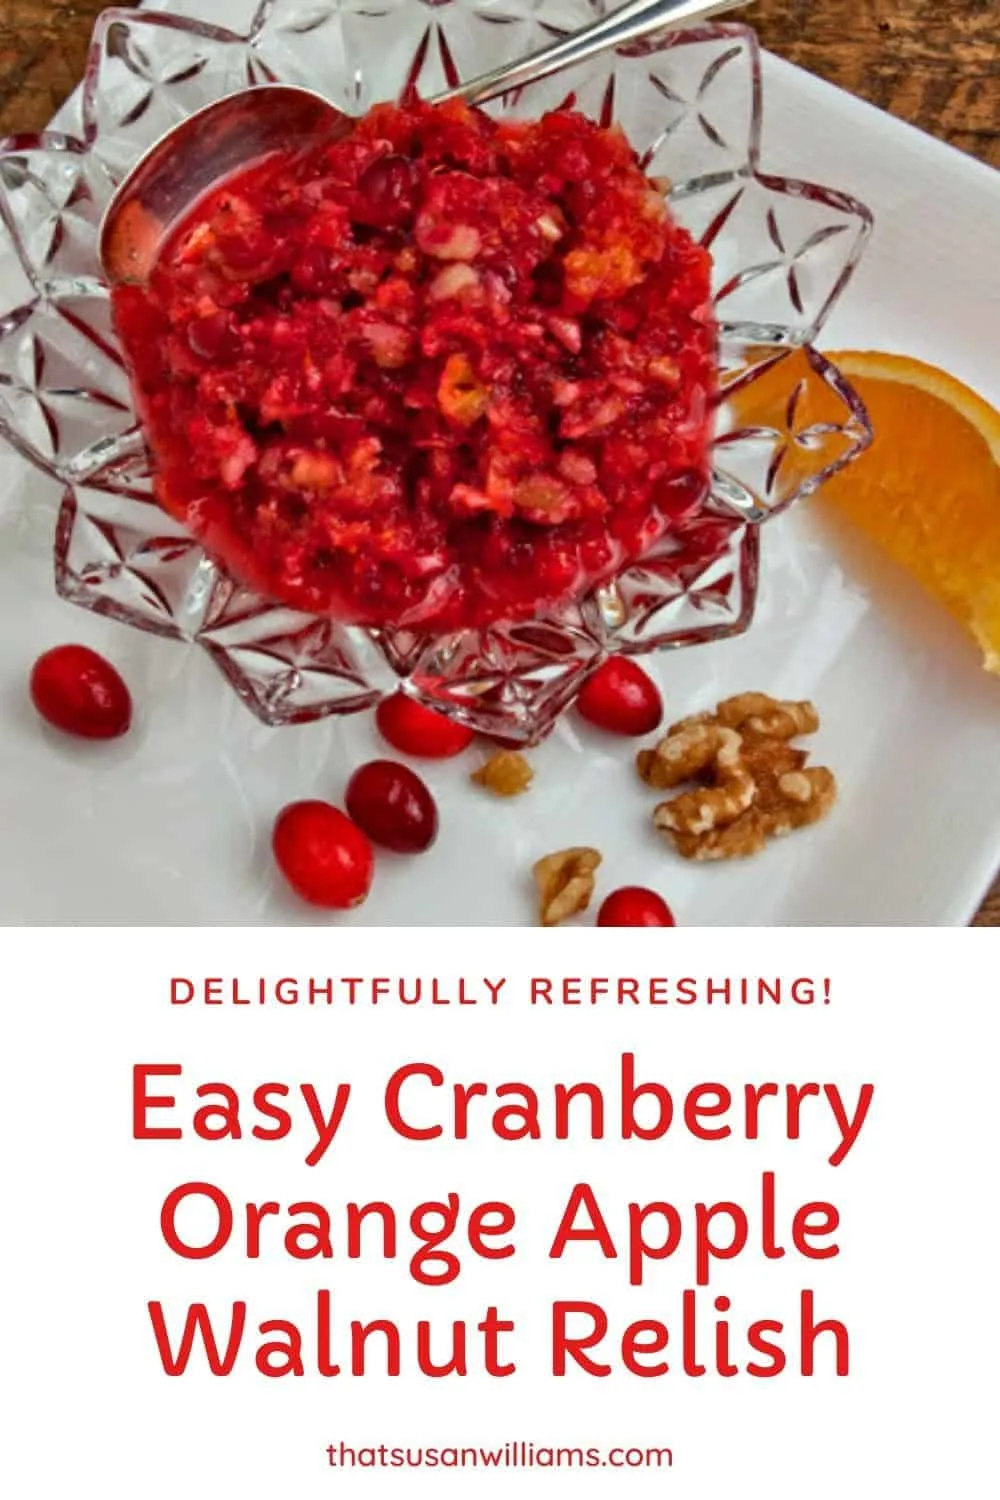 Easy Cranberry Orange Apple Walnut Relish